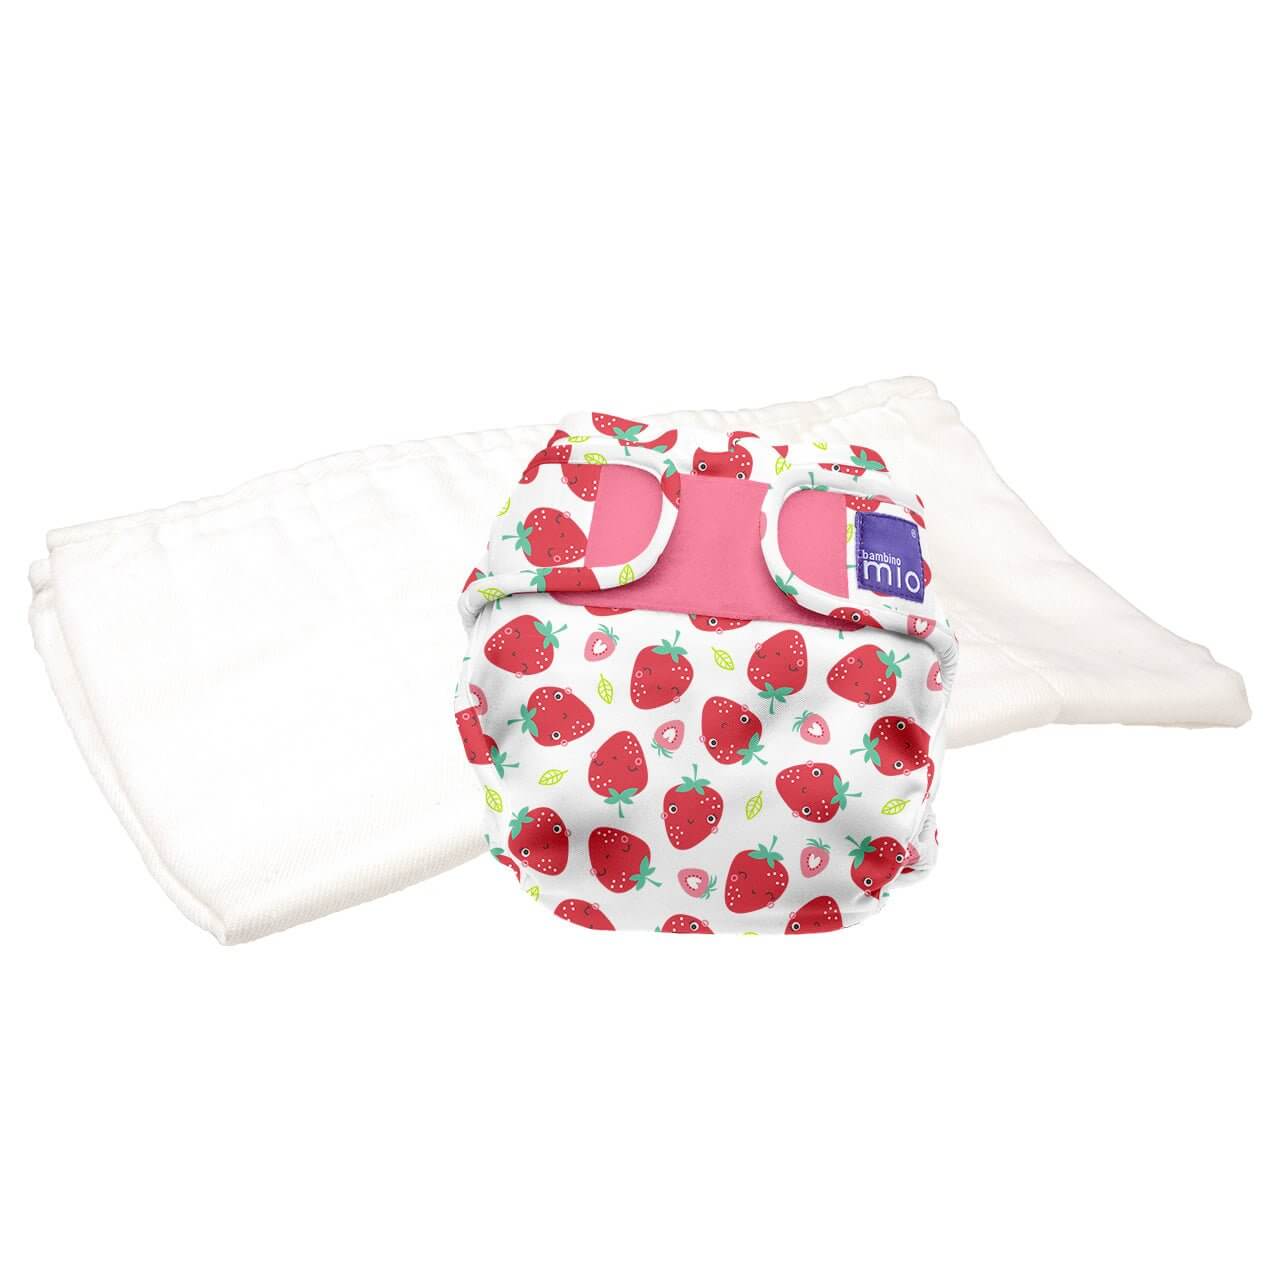 Bambino Mio Mioduo Two-Piece Nappy Size: Size 1 Colour: Strawberry Cream reusable nappies Earthlets